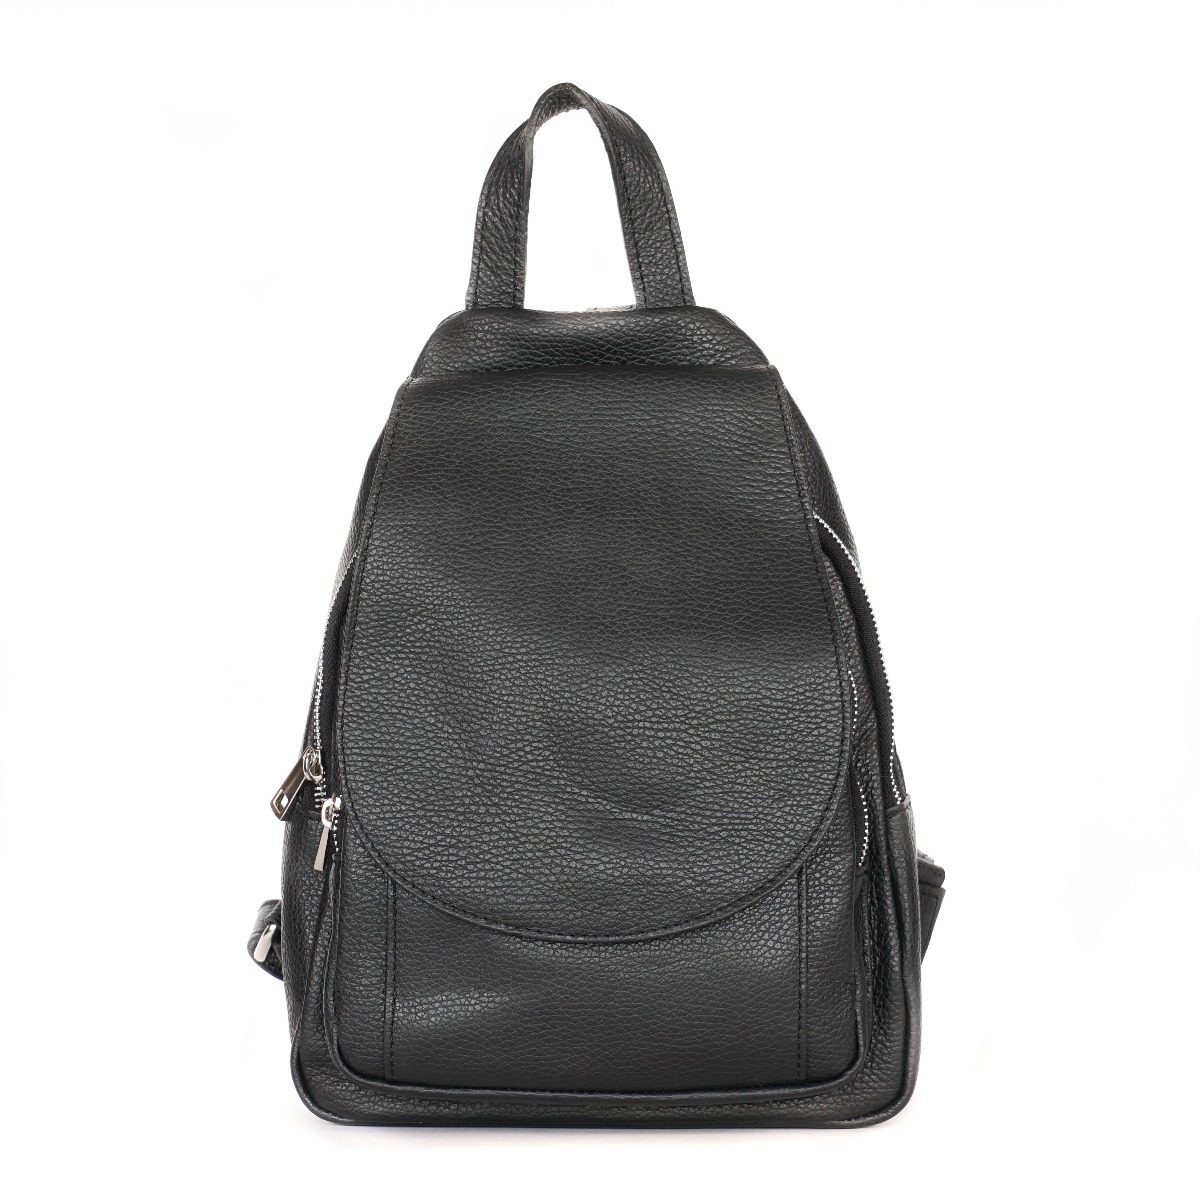 Women medium size genuine leather backpack black